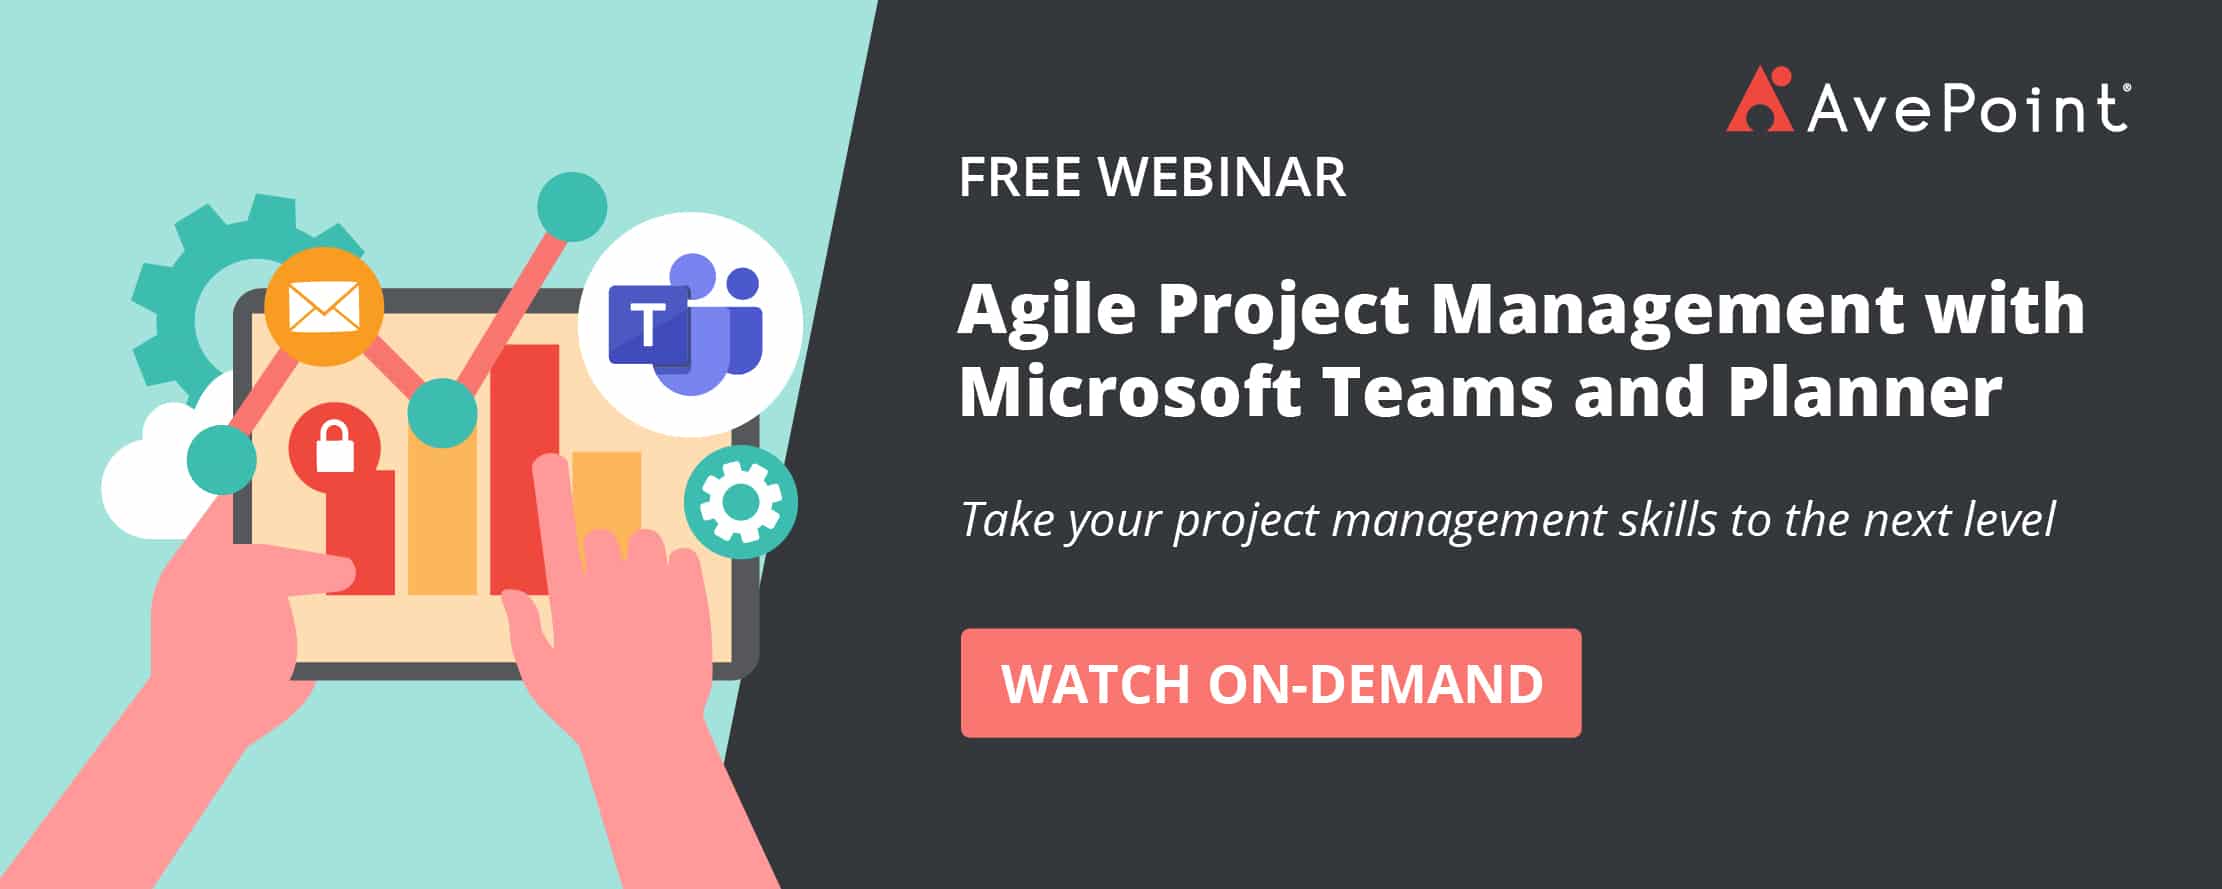 agile-project-management-microsoft-teams